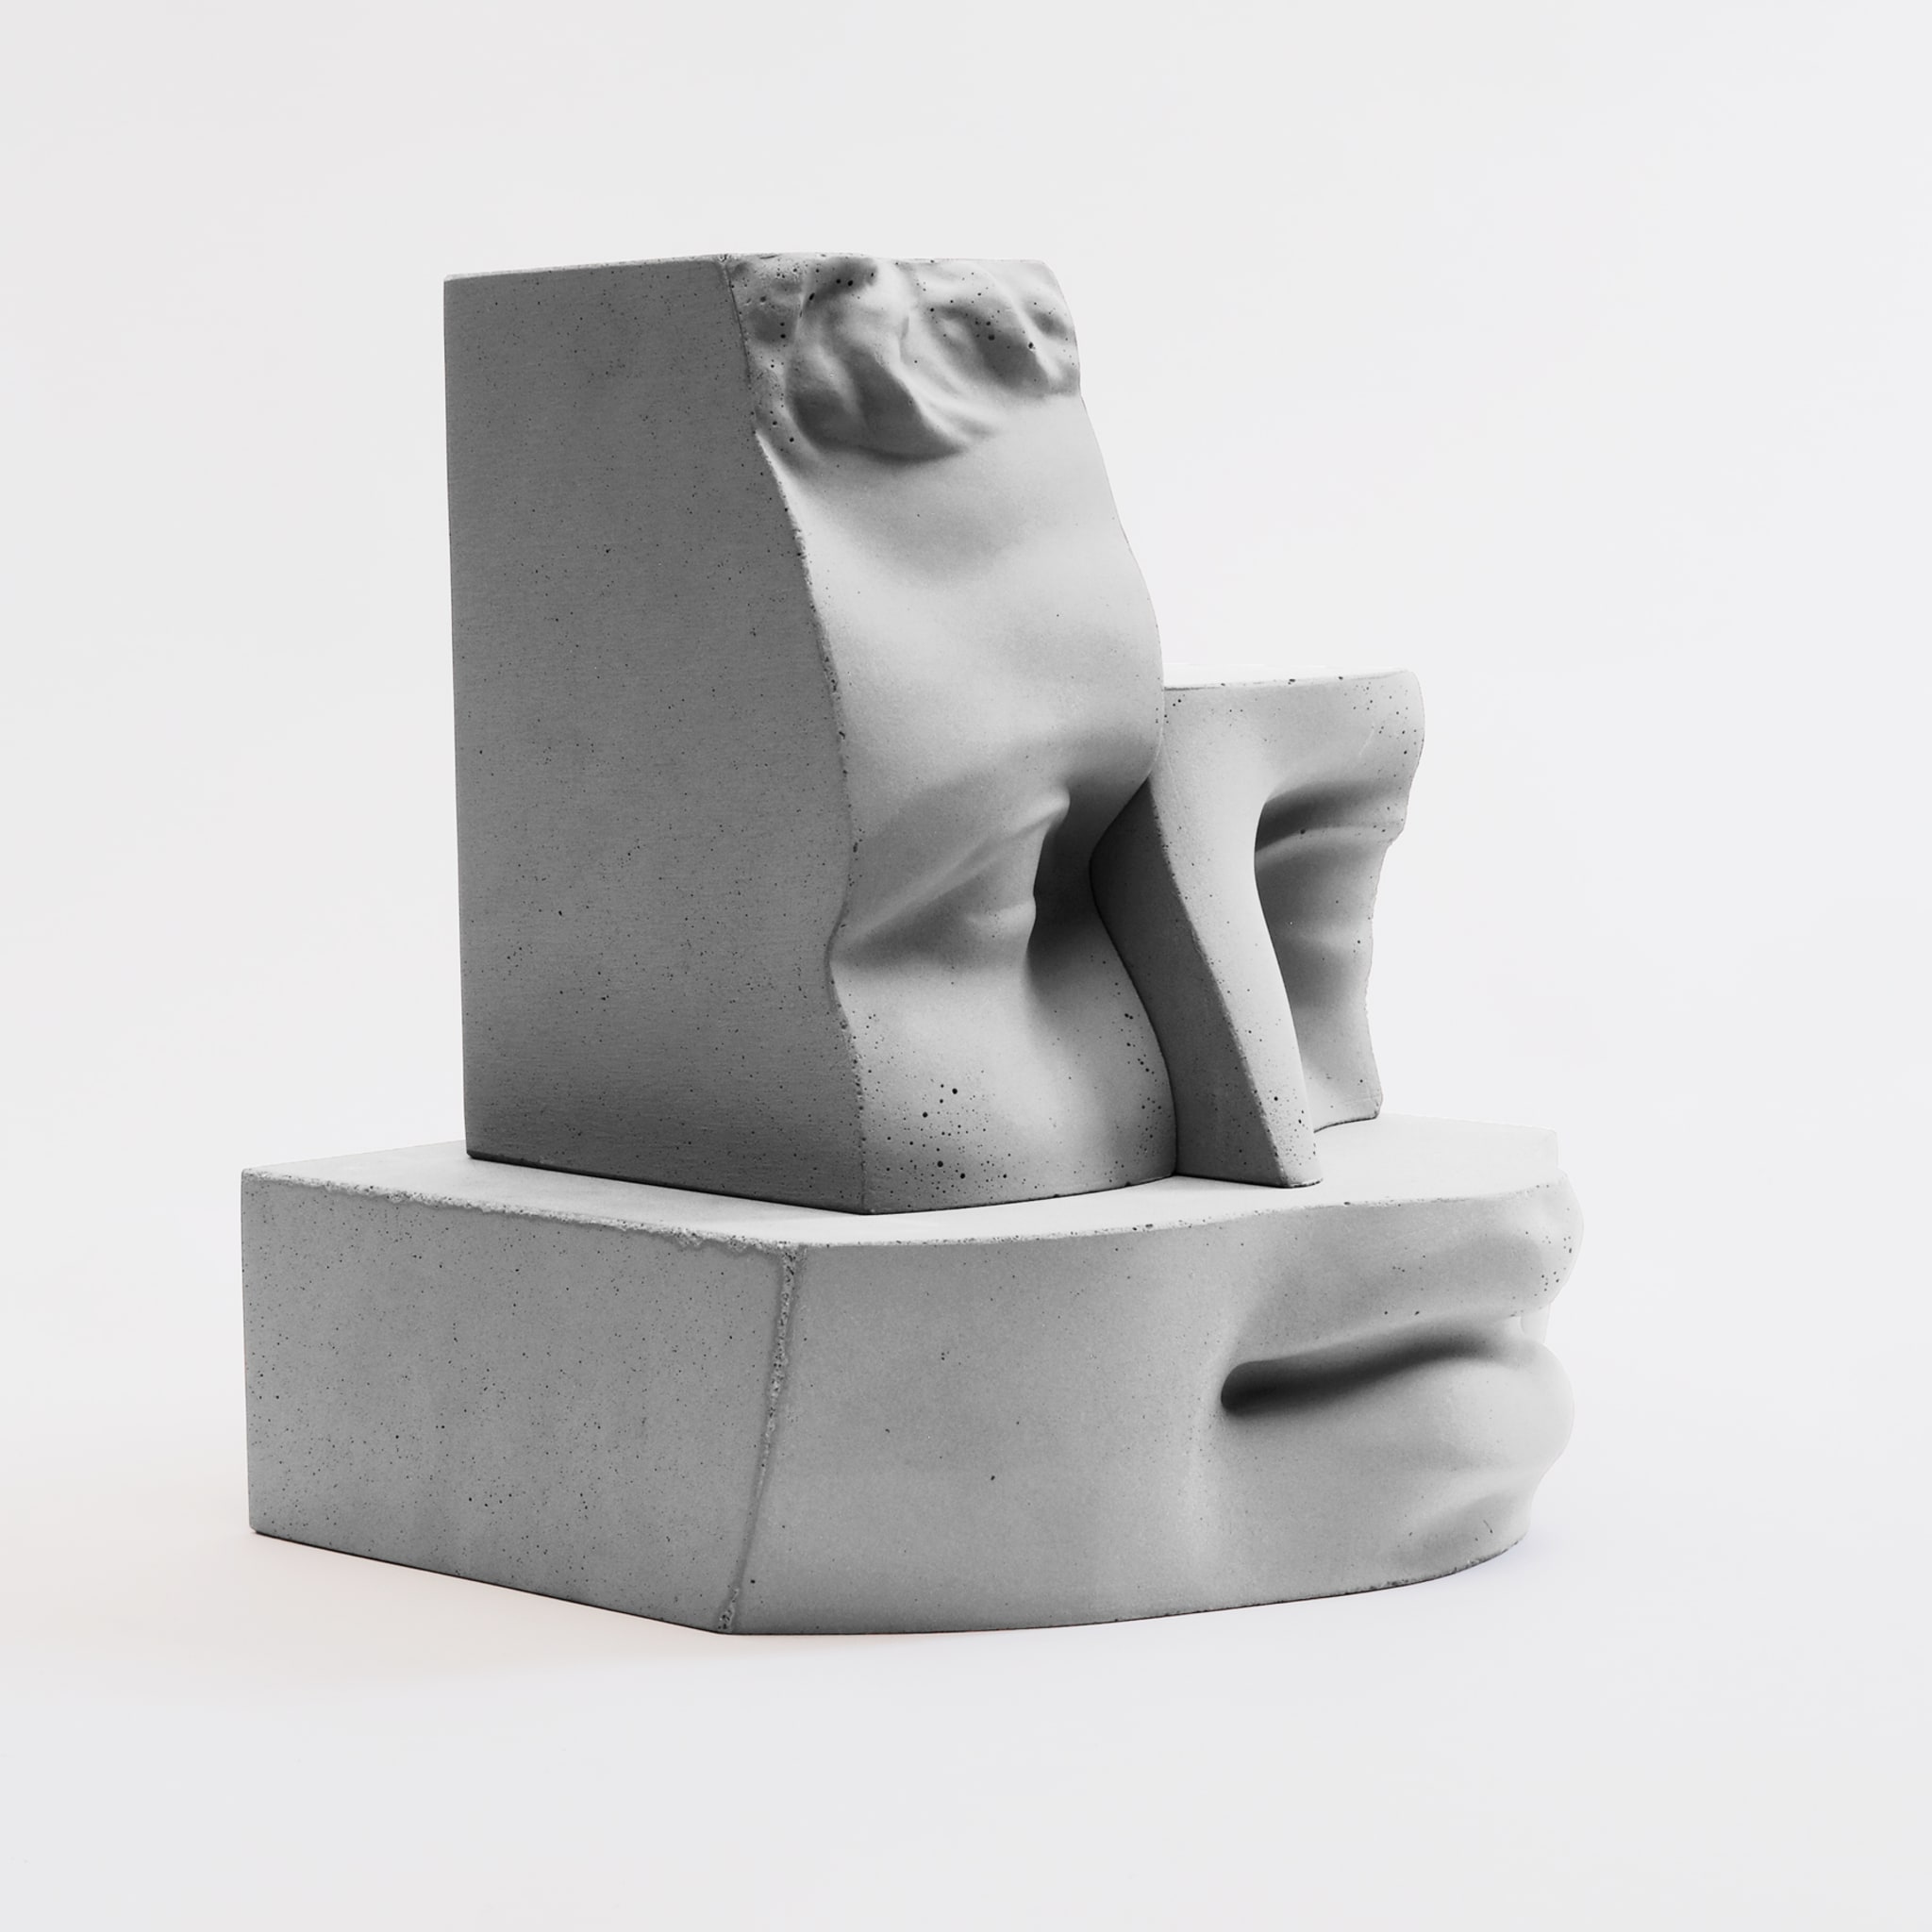 Grey Hermes sculpture - Alternative view 3